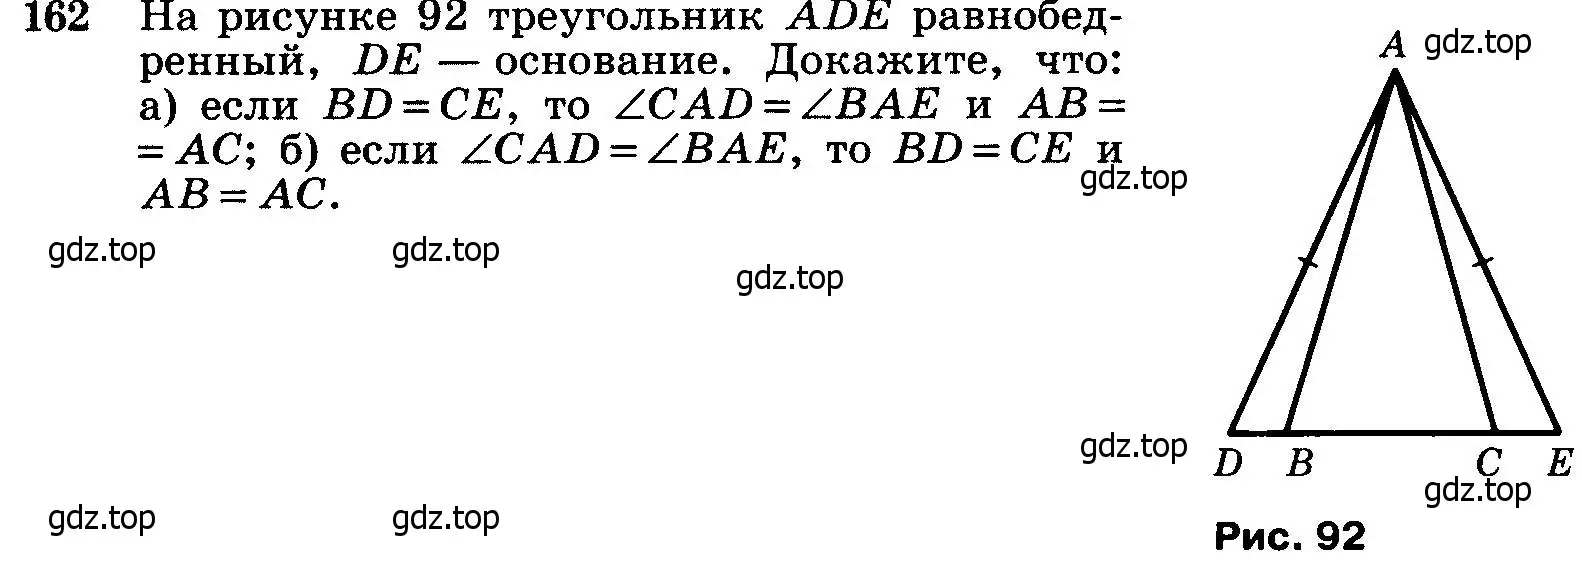 Условие номер 162 (страница 49) гдз по геометрии 7-9 класс Атанасян, Бутузов, учебник